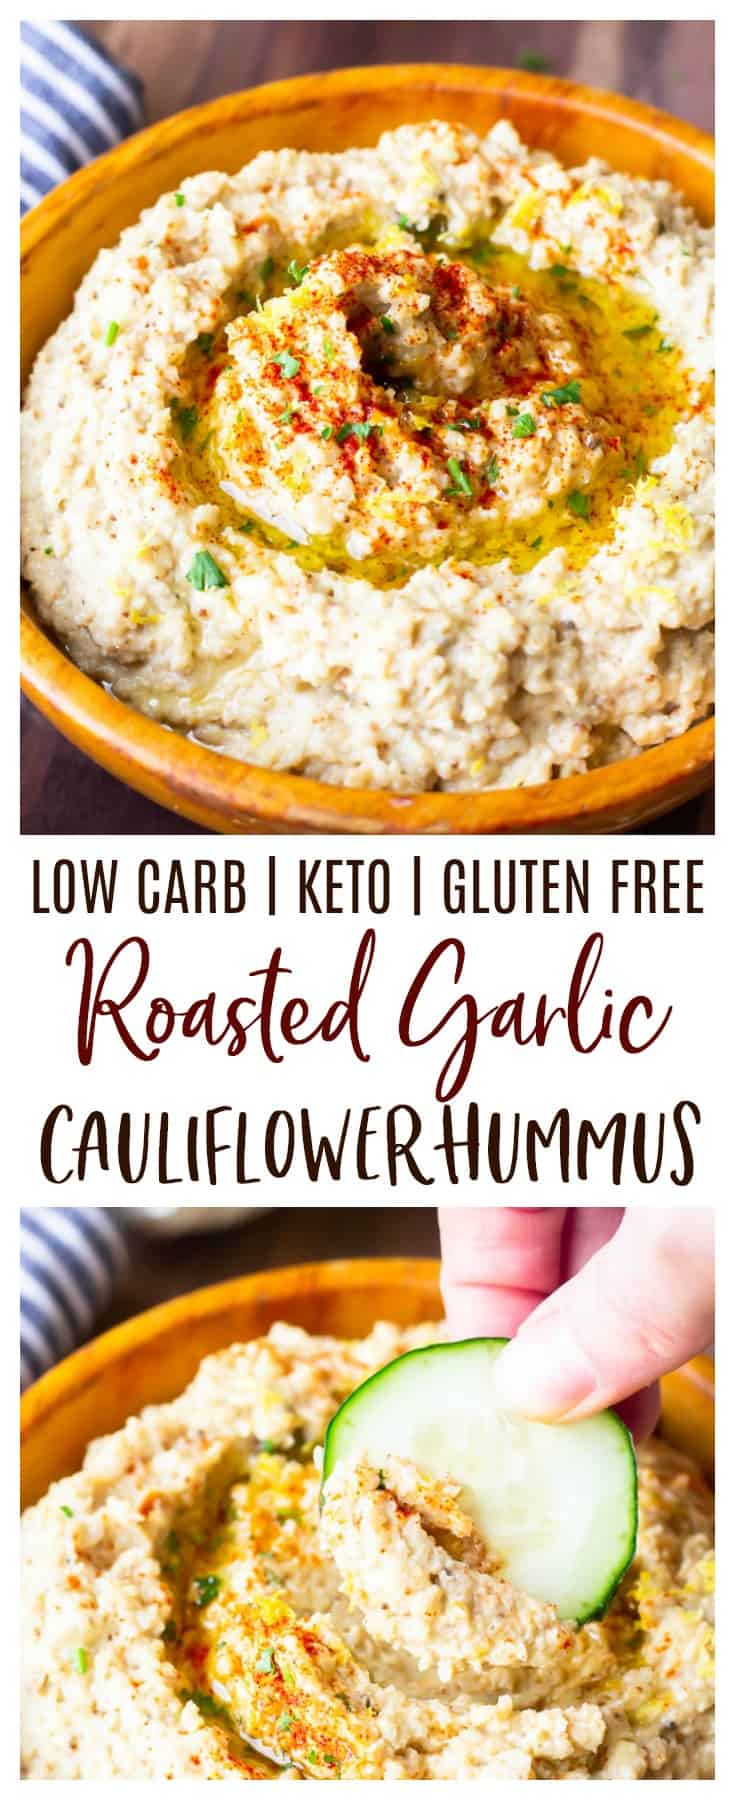 Easy Keto Roasted Garlic Cauliflower Hummus Recipe - Delicious Little Bites